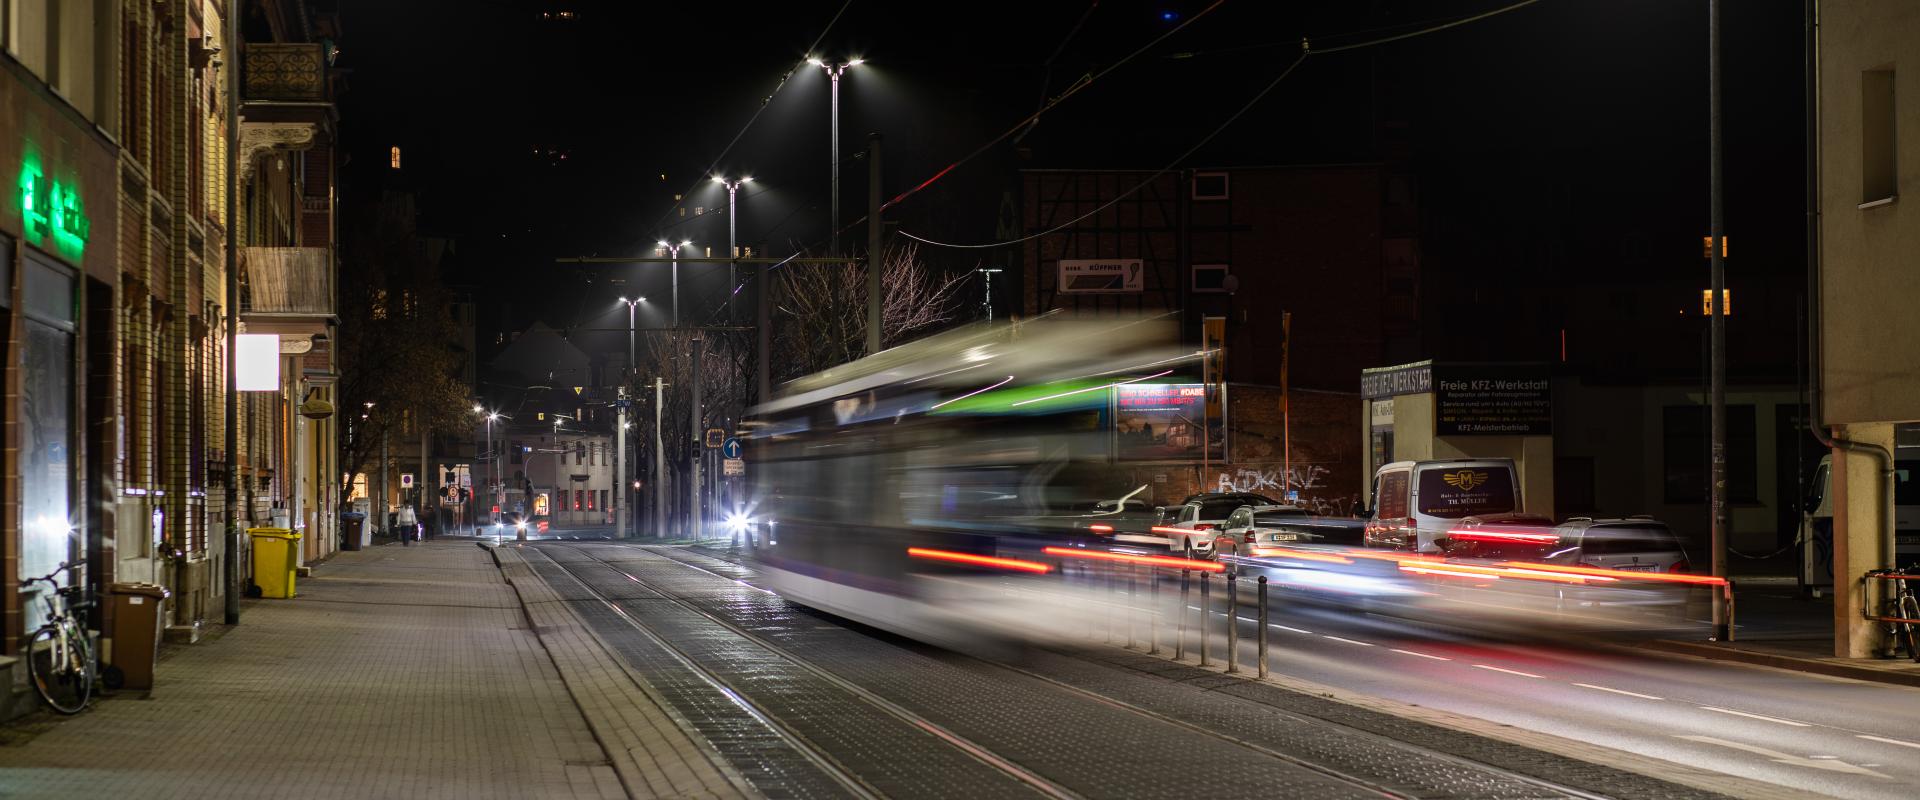 Night-time street lighting and traffic